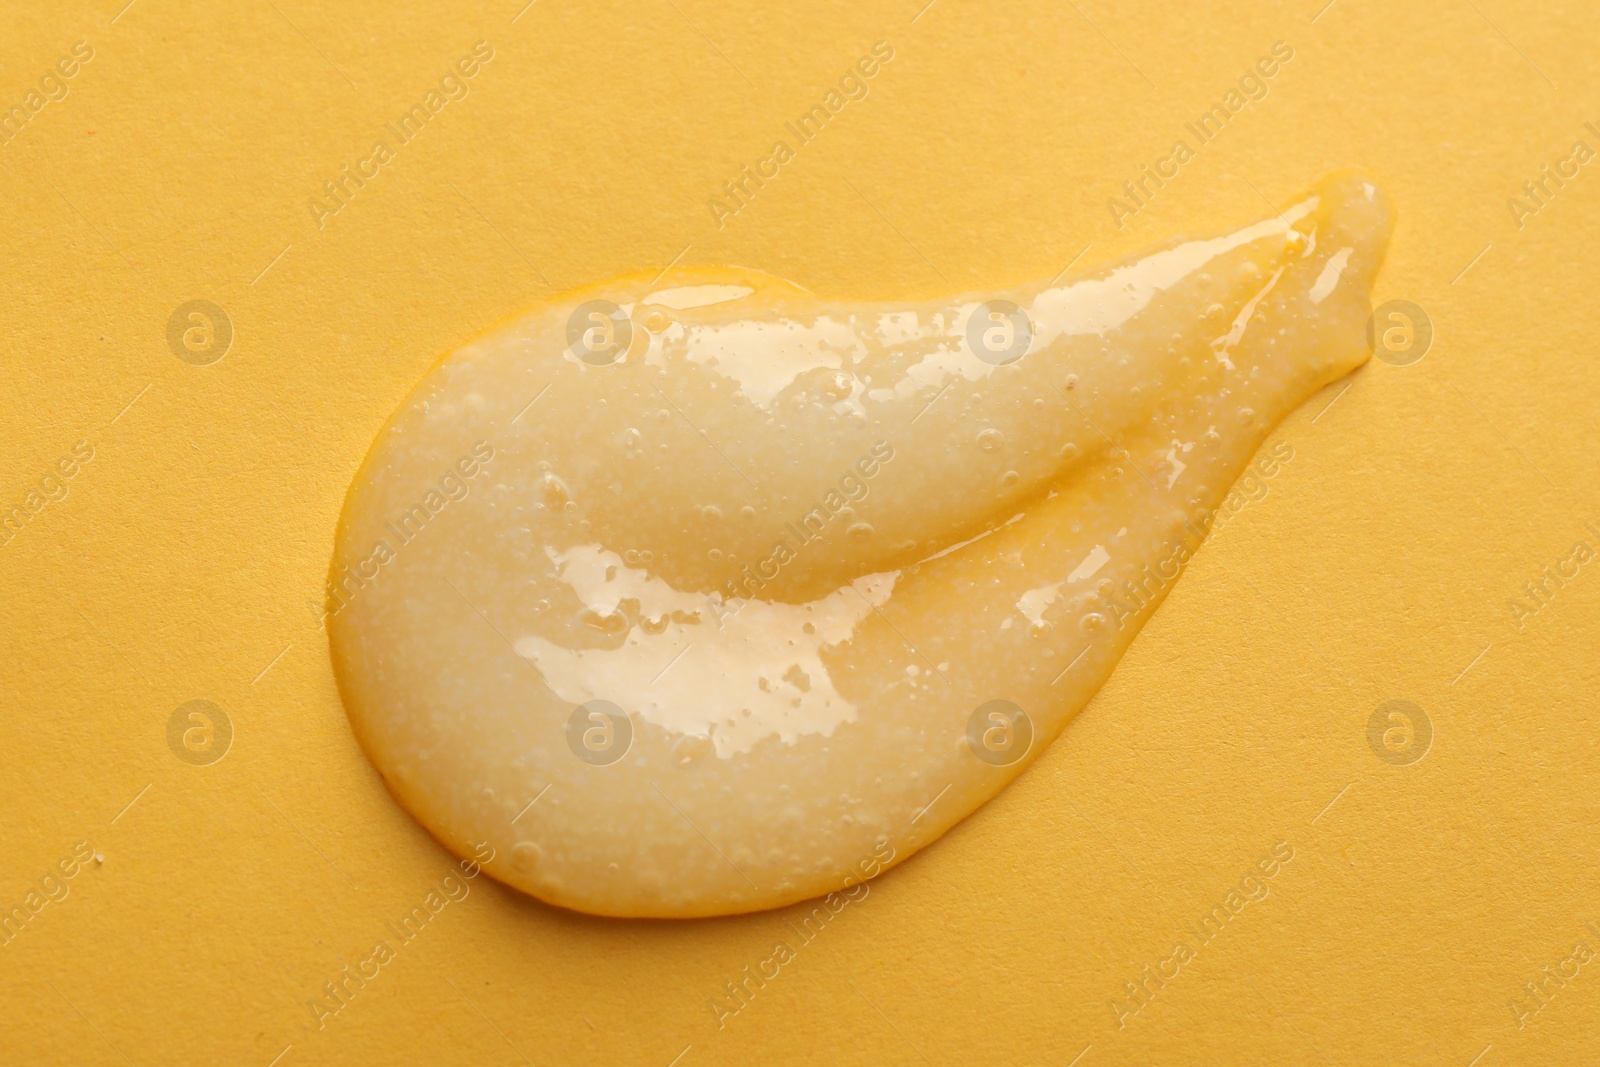 Photo of Sample of scrub on orange background, top view